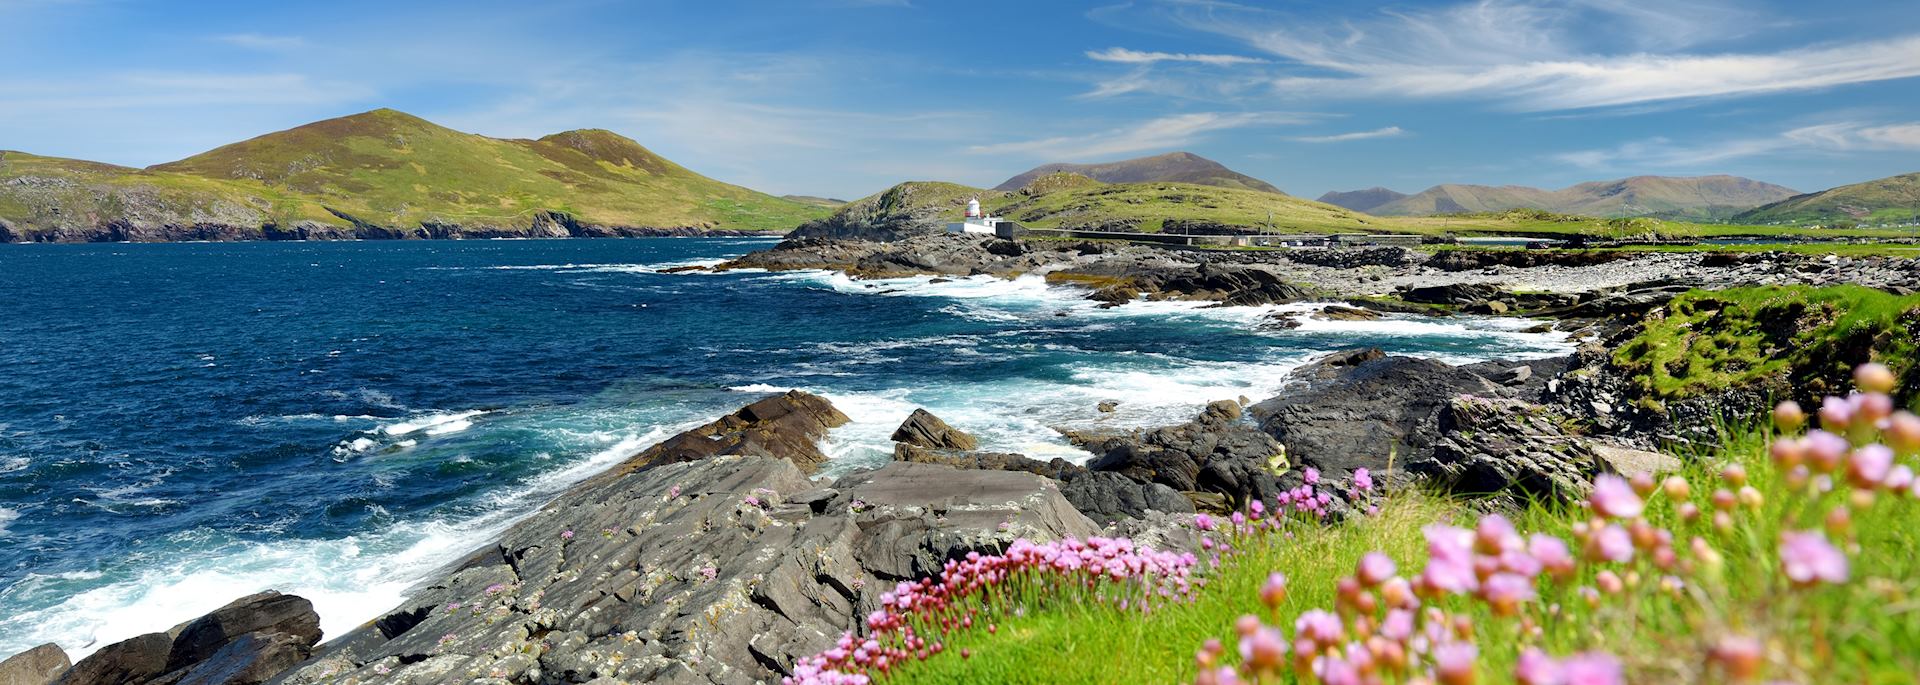 Valentia Island Lighthouse, County Kerry